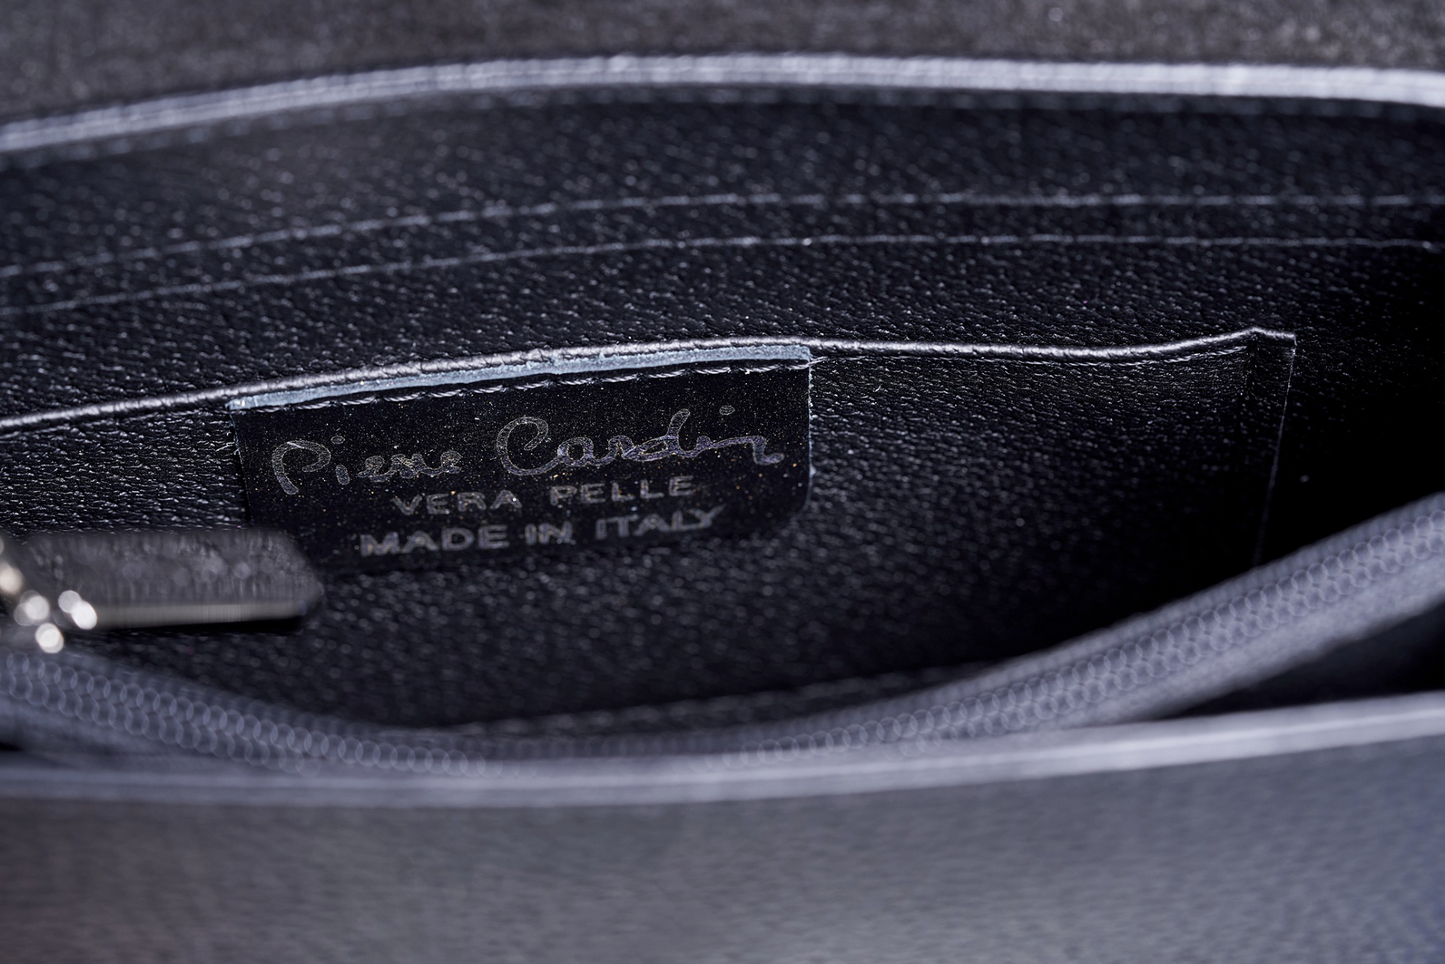 Pierre Cardin caramello leather handbag for women